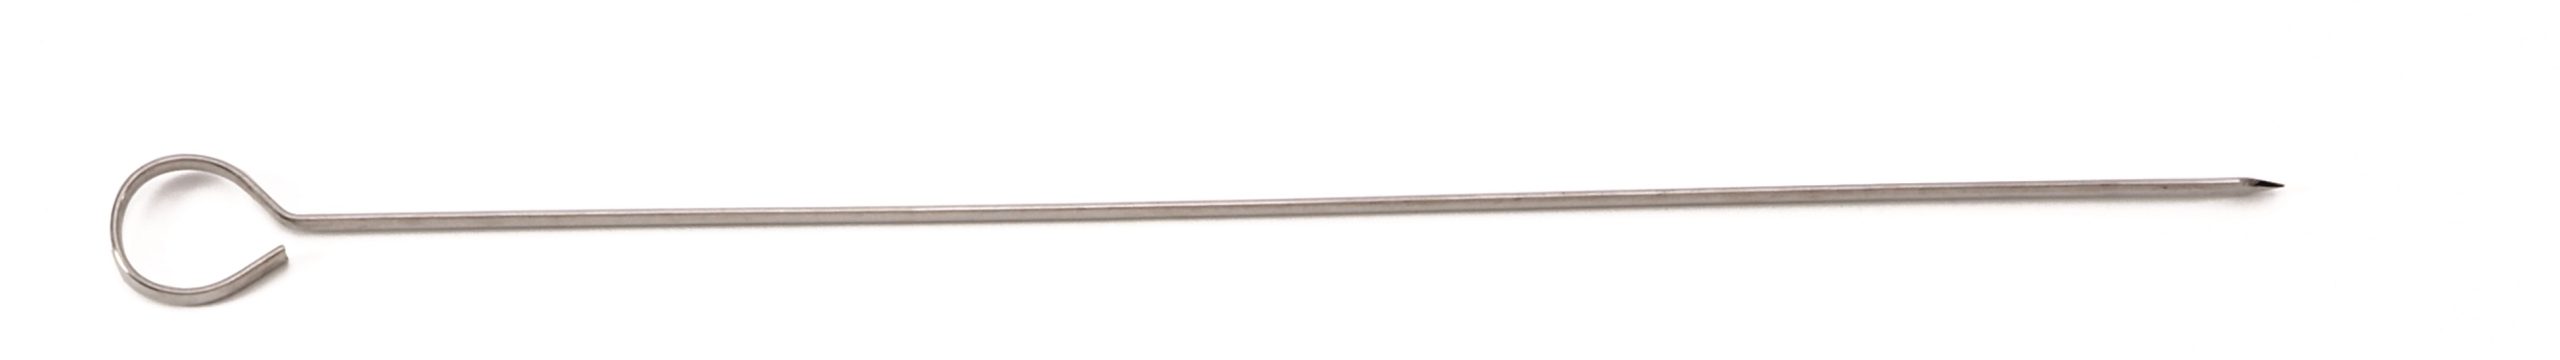 314 Stainless Steel Oval Skewer 35.5cm TABLECRAFT